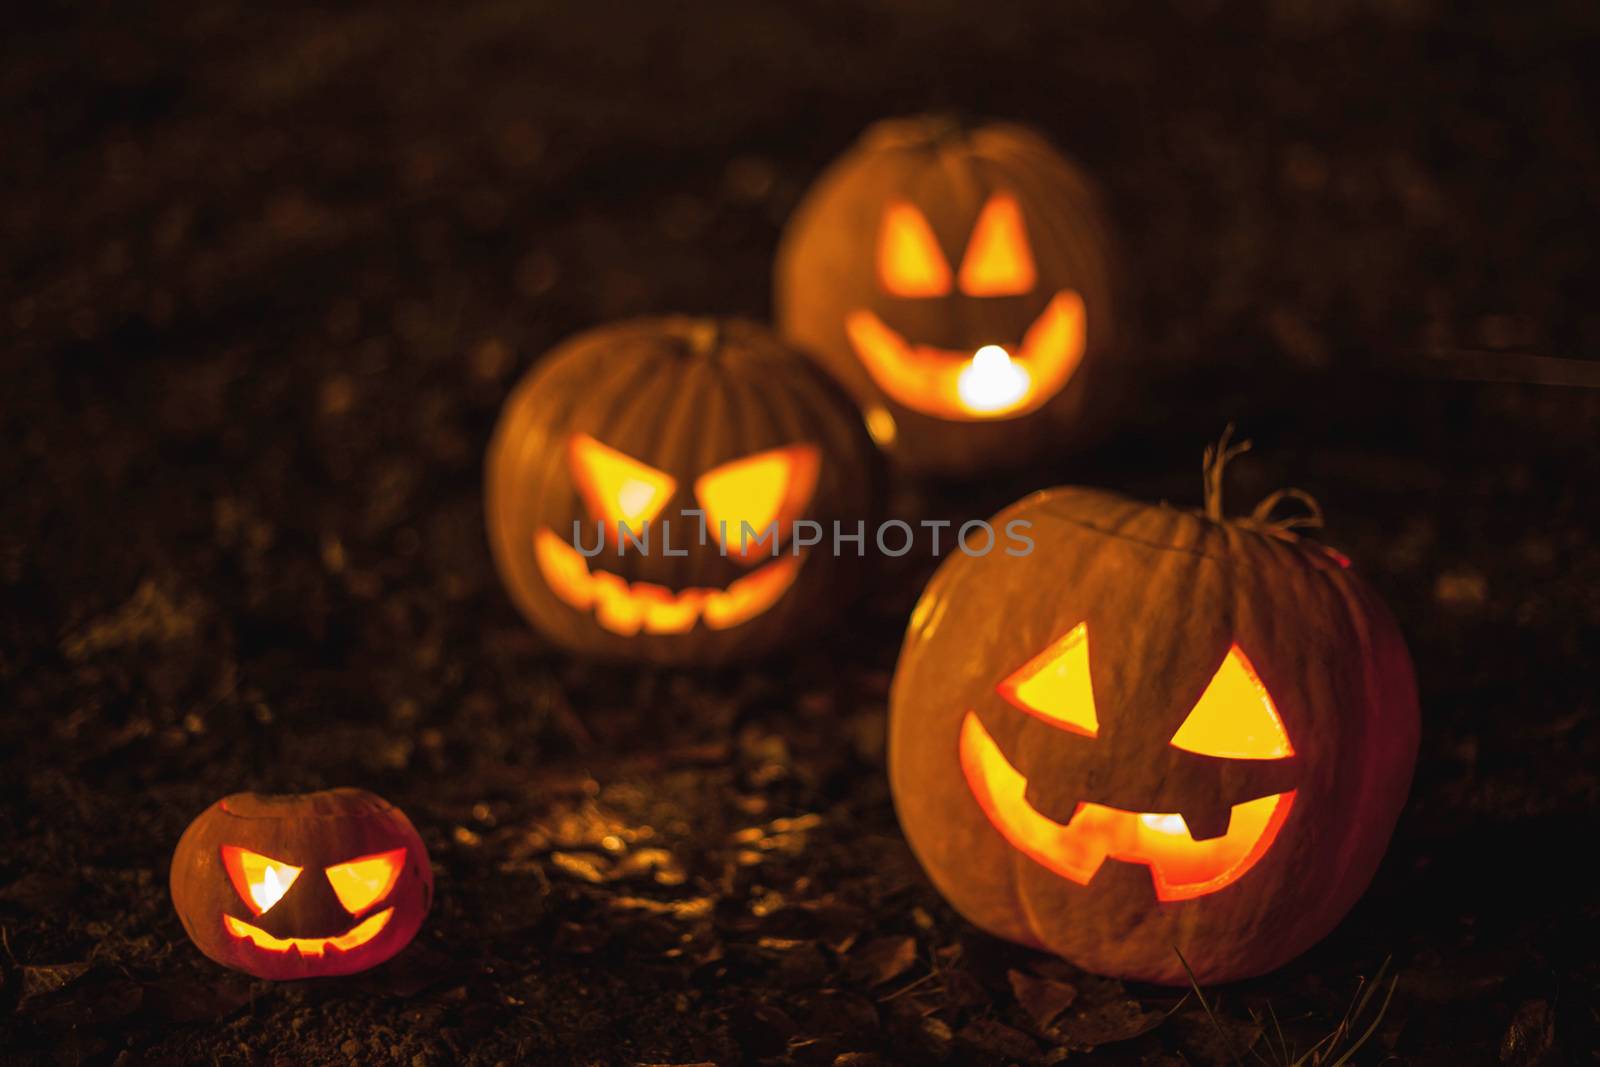 Halloween jack-o-lanterns by Yellowj